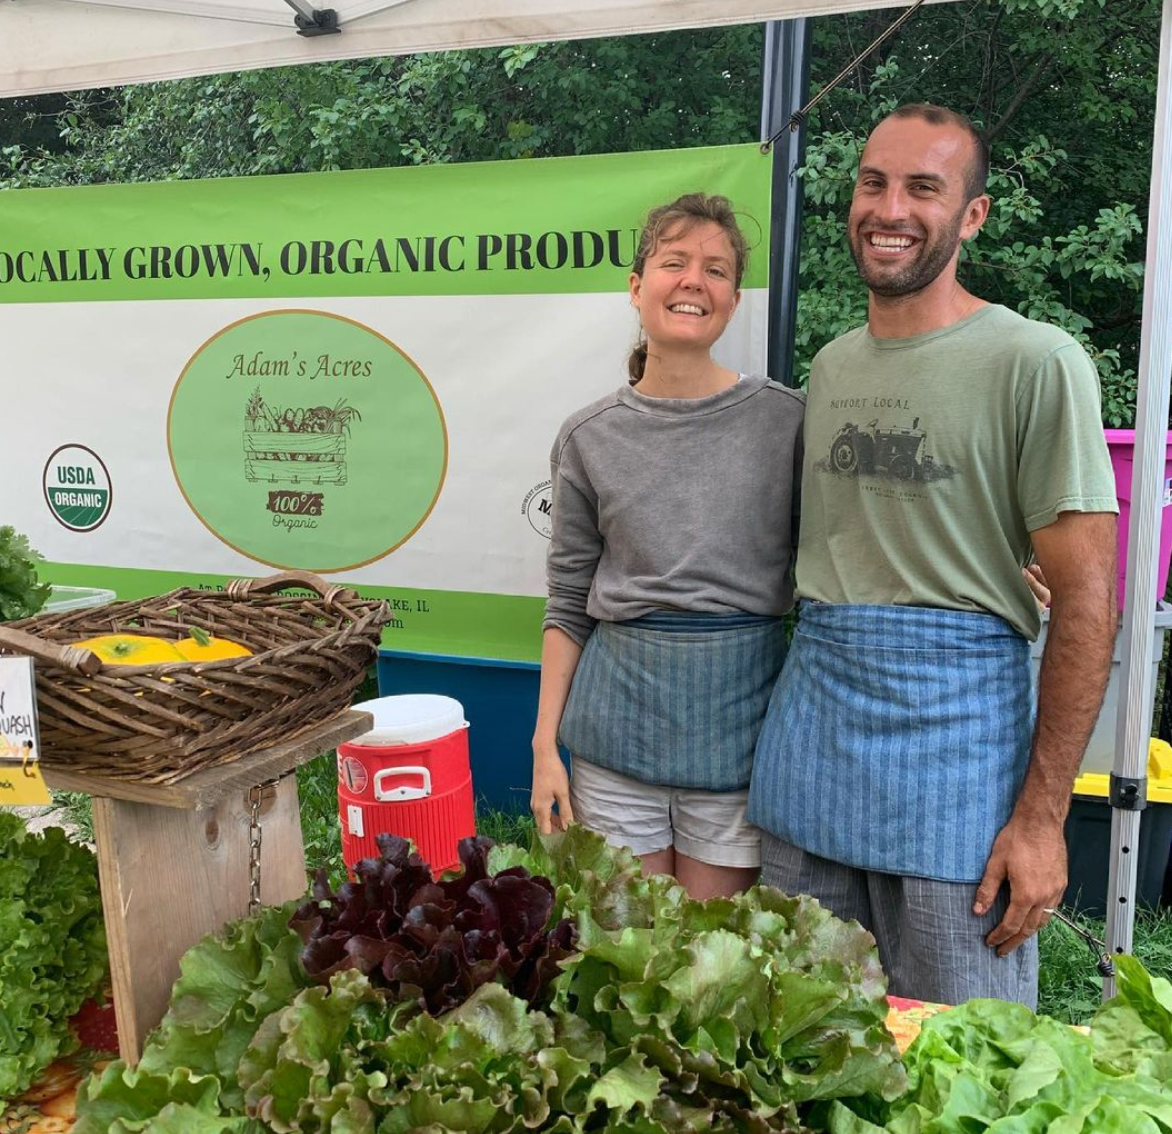 Farming Entrepreneurs: BoysGrow Kansas City - Amborella Organics